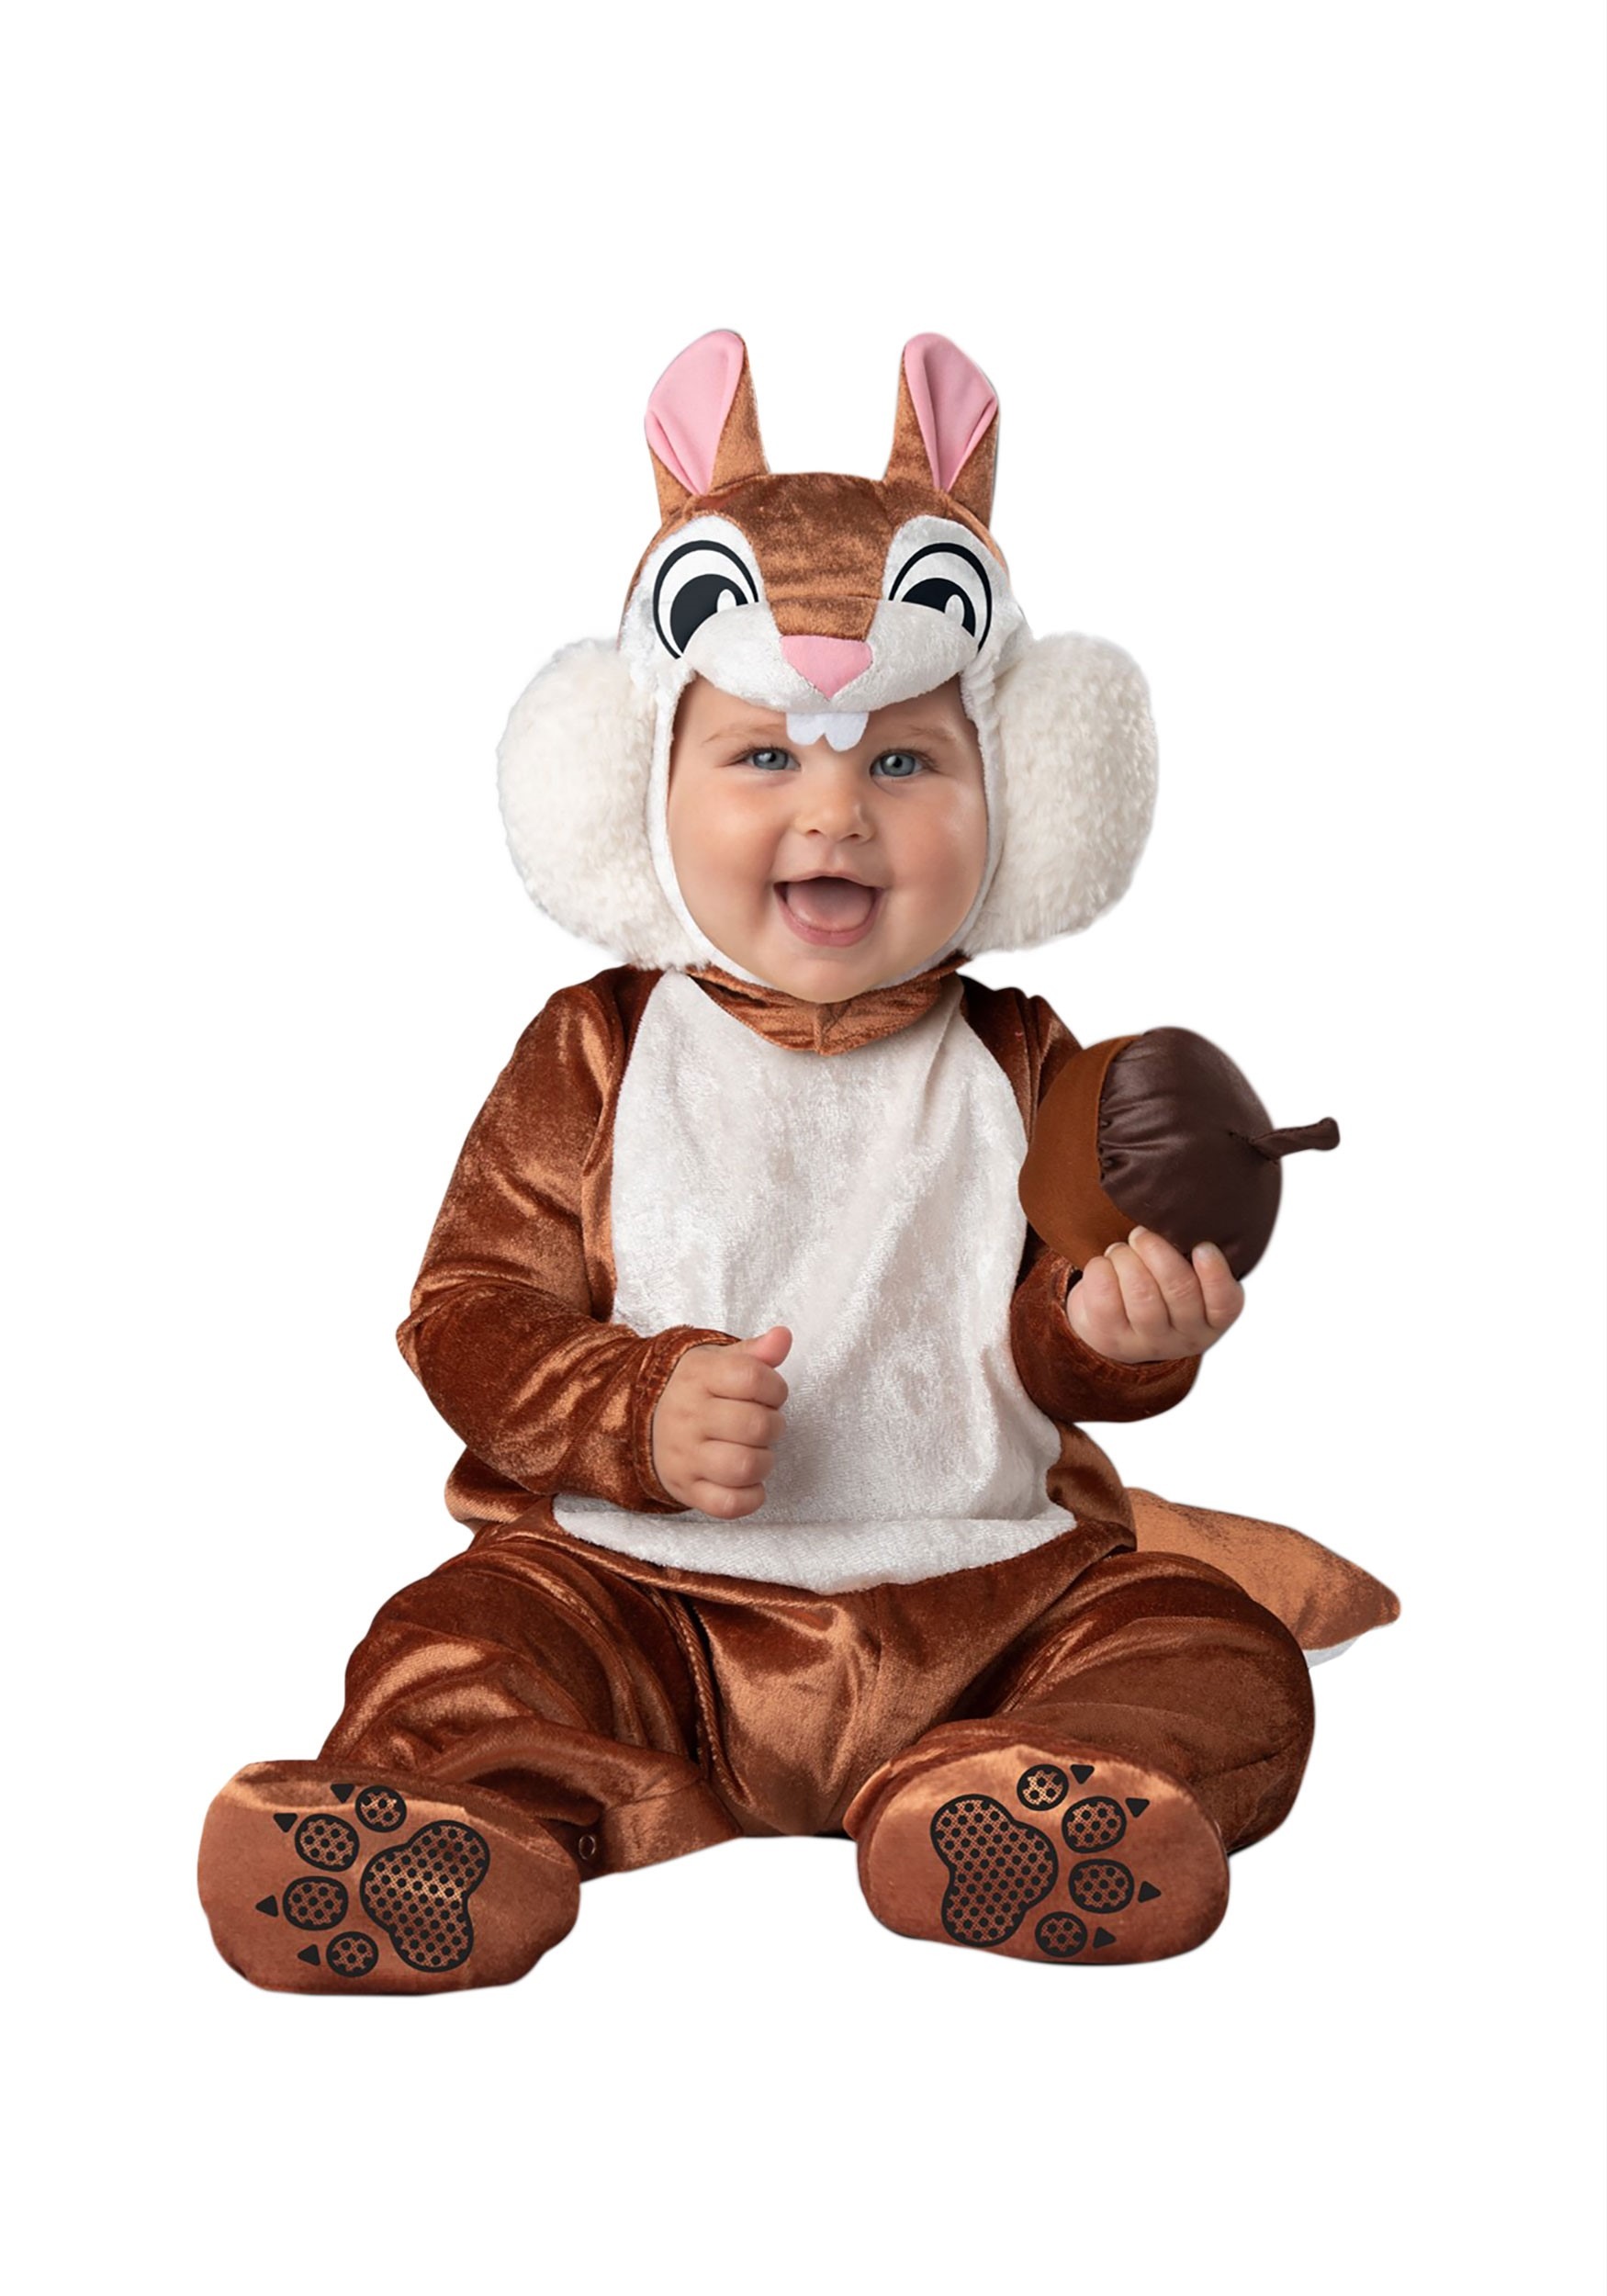 Cheeky Infant Chipmunk Costume